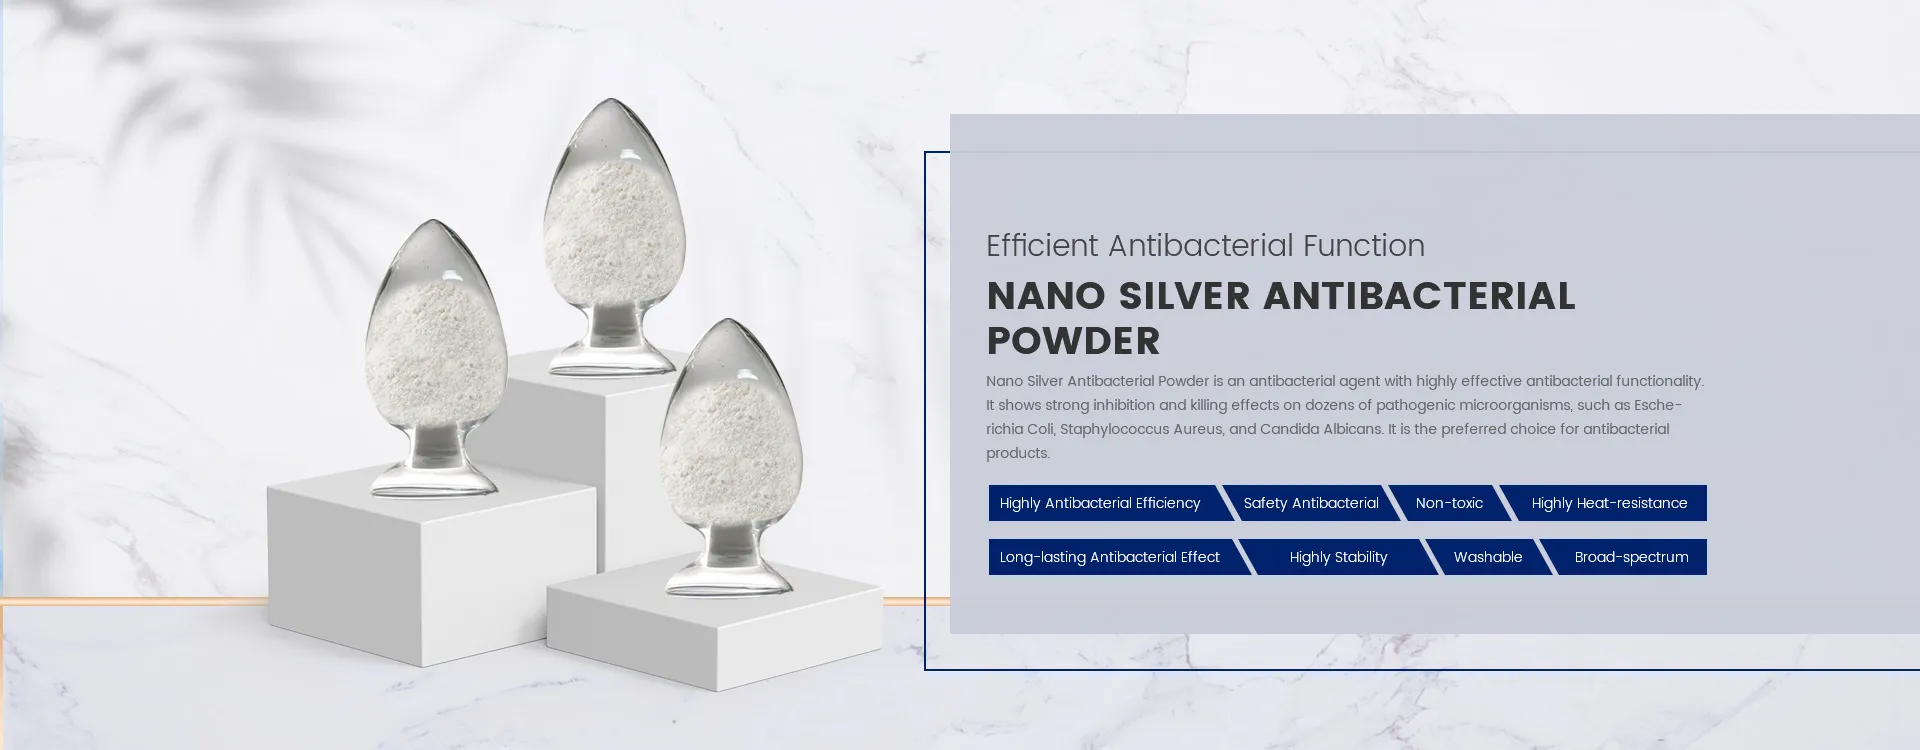 Efficient Antibacterial Function Nano Silver Antibacterial Powder